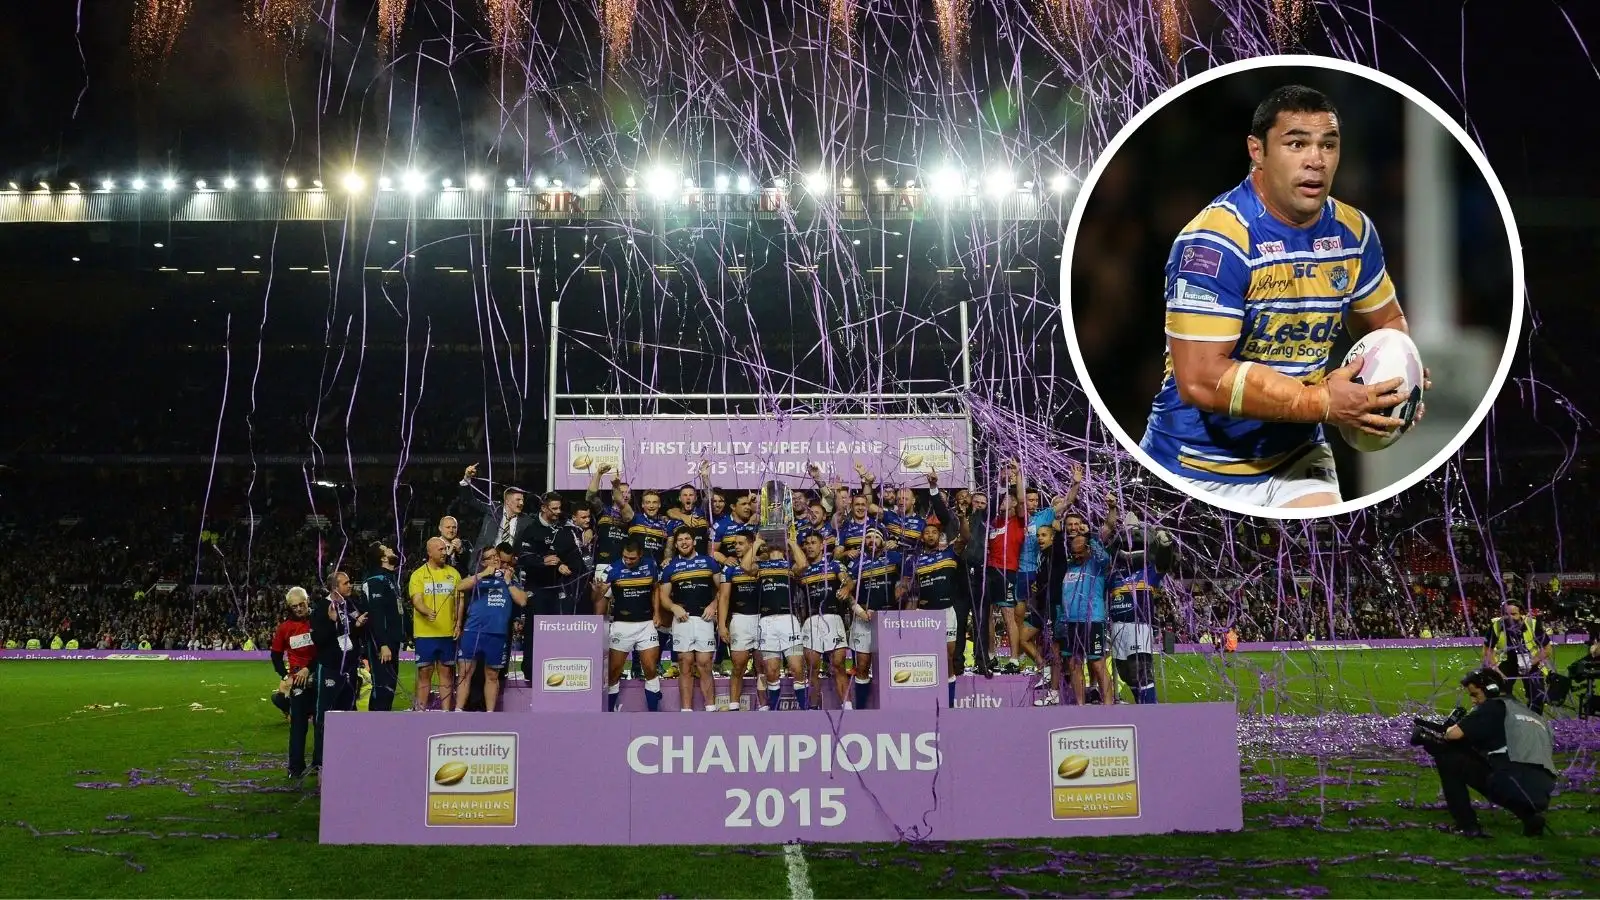 Leeds Rhinos celebrate their 2015 Super League Grand Final win; Kylie Leuluai